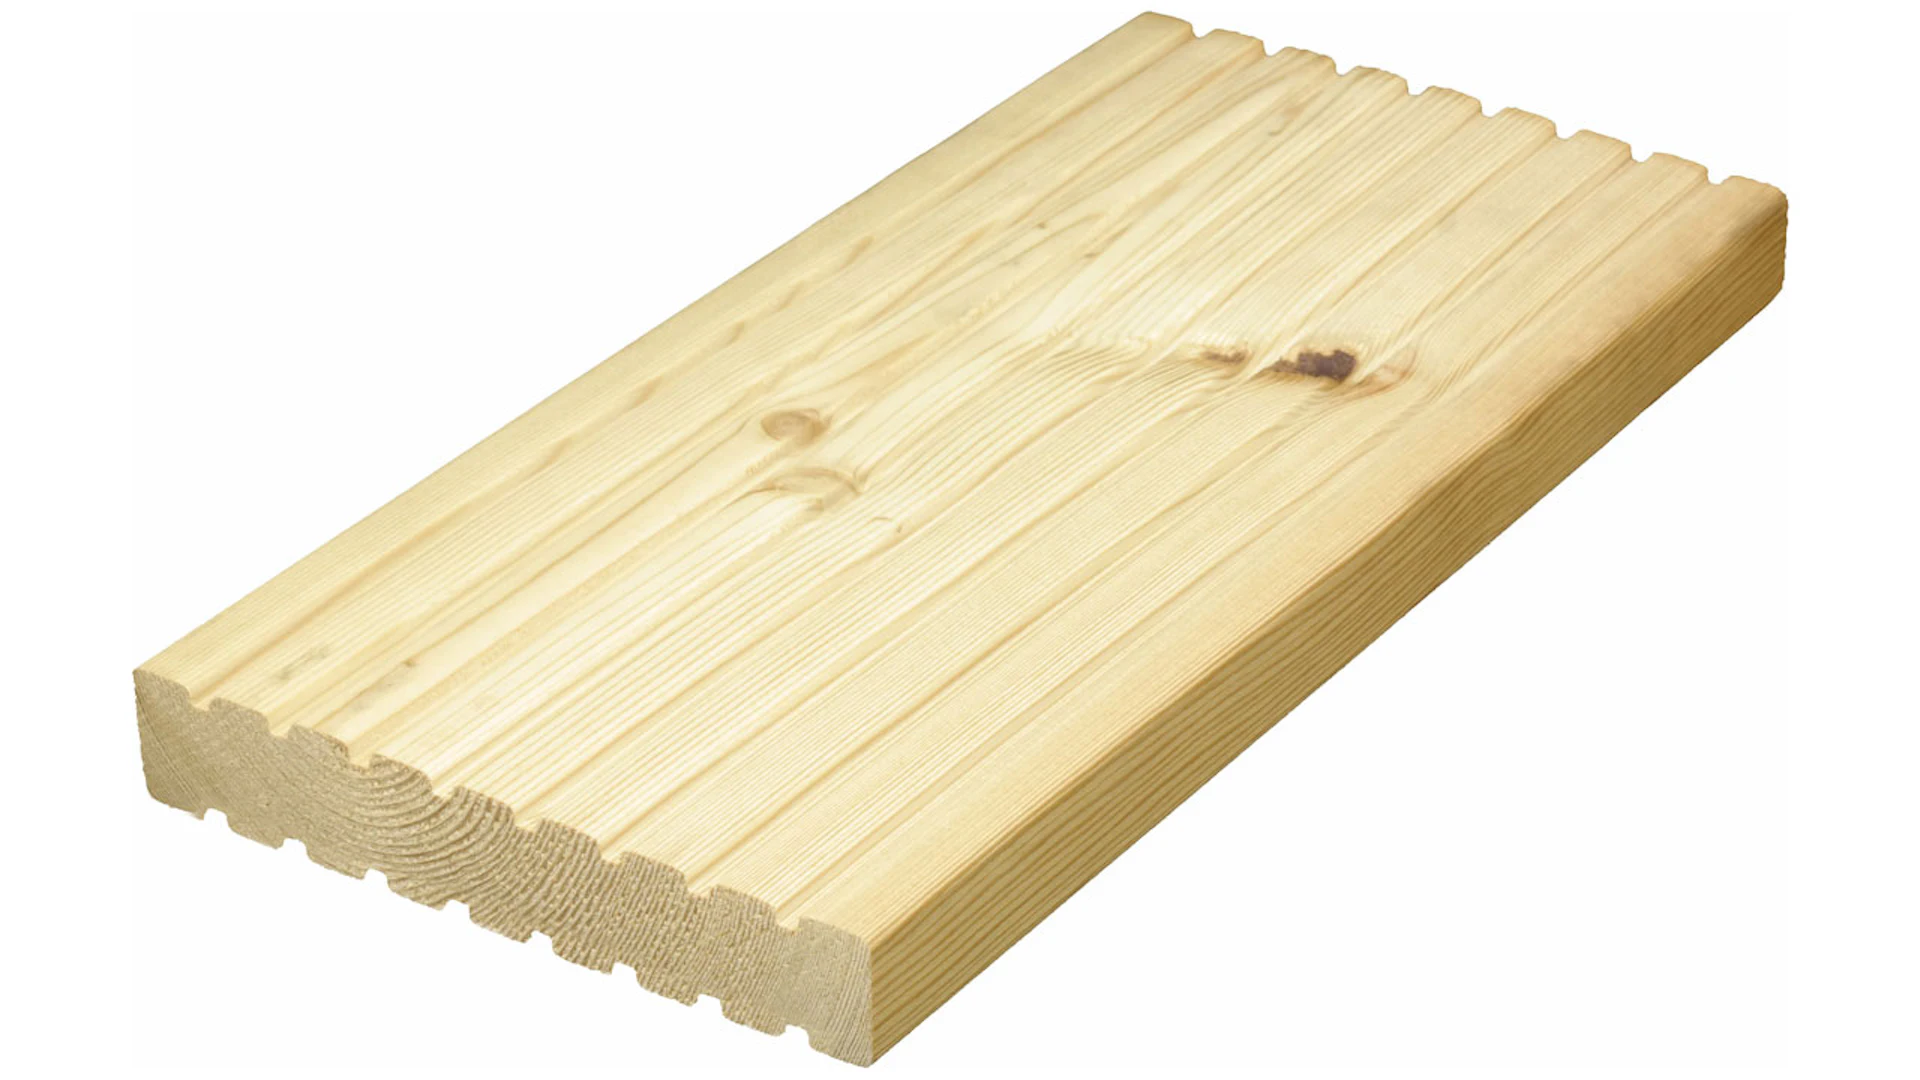 TerraWood Wood Decking - Larice Siberiano 26 x 143 x 4200mm scanalato su entrambi i lati